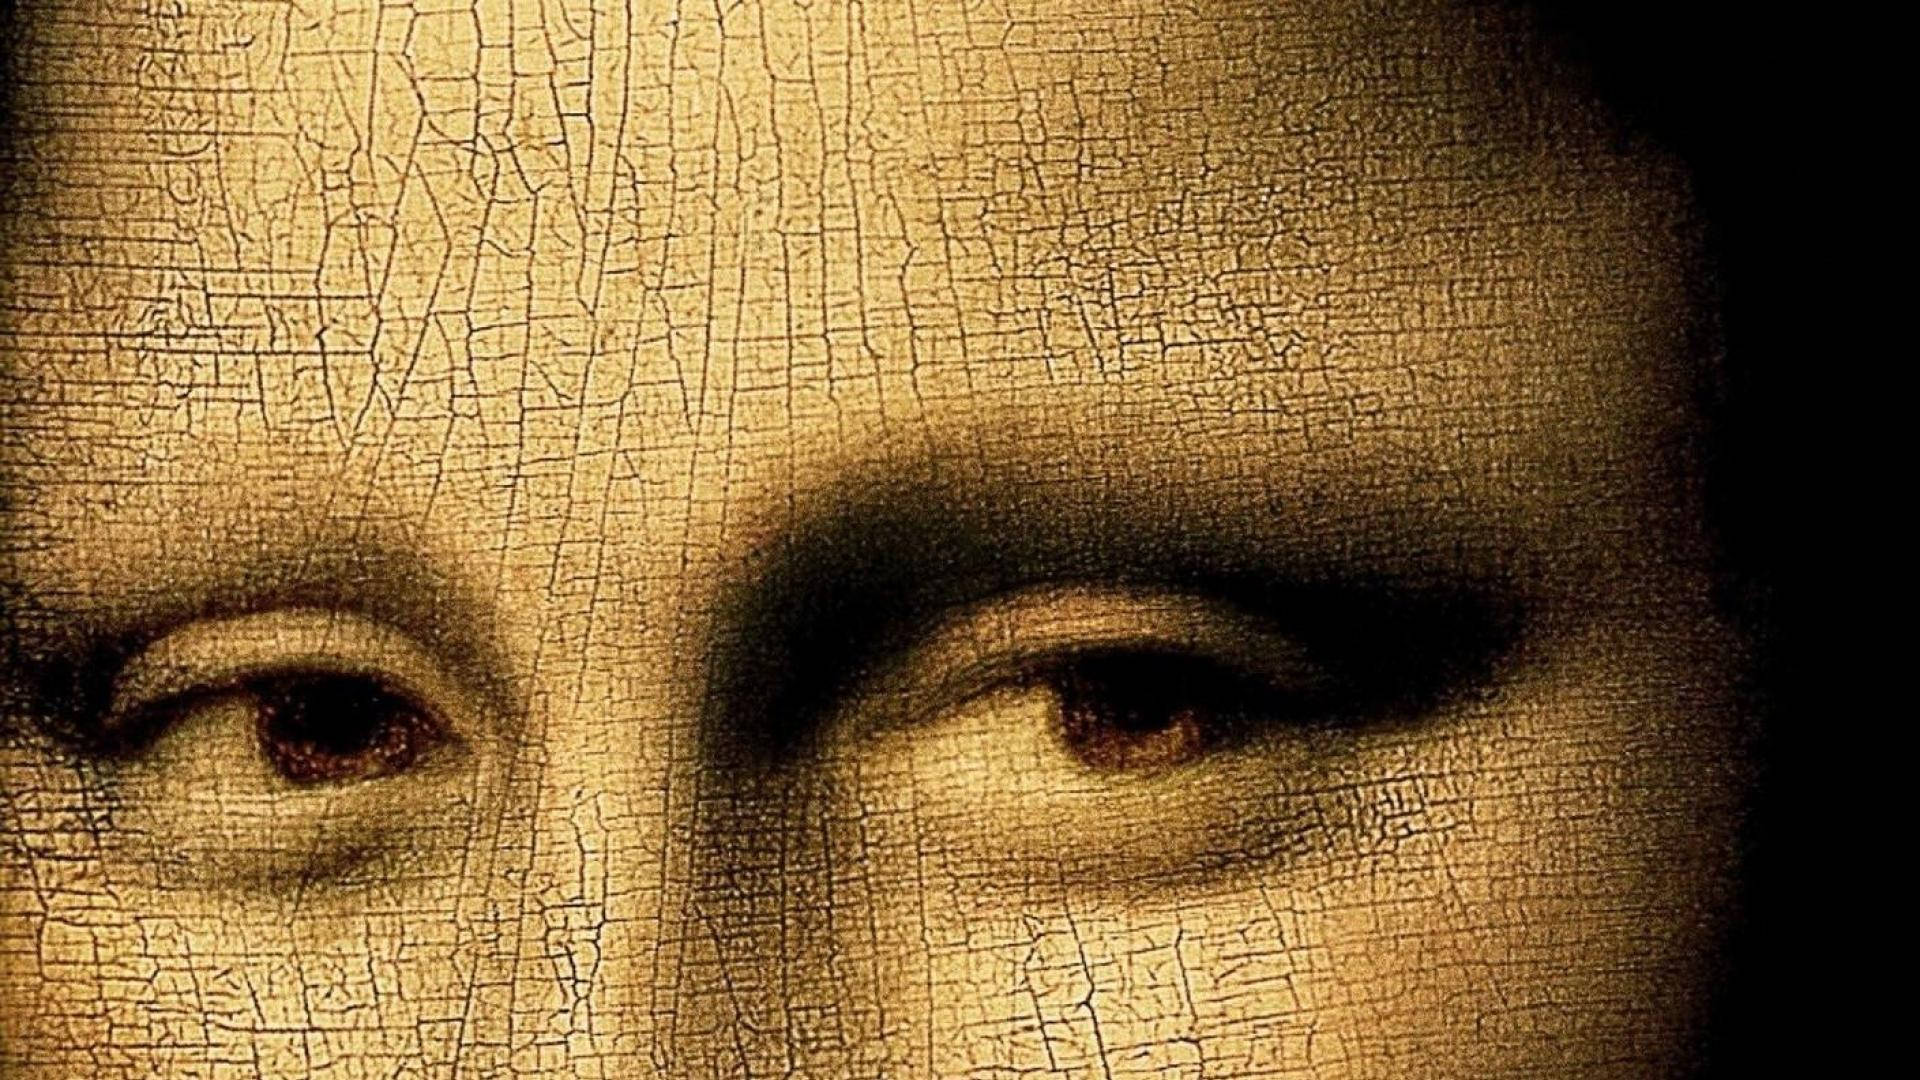 Mona Lisa Mysterious Eyes